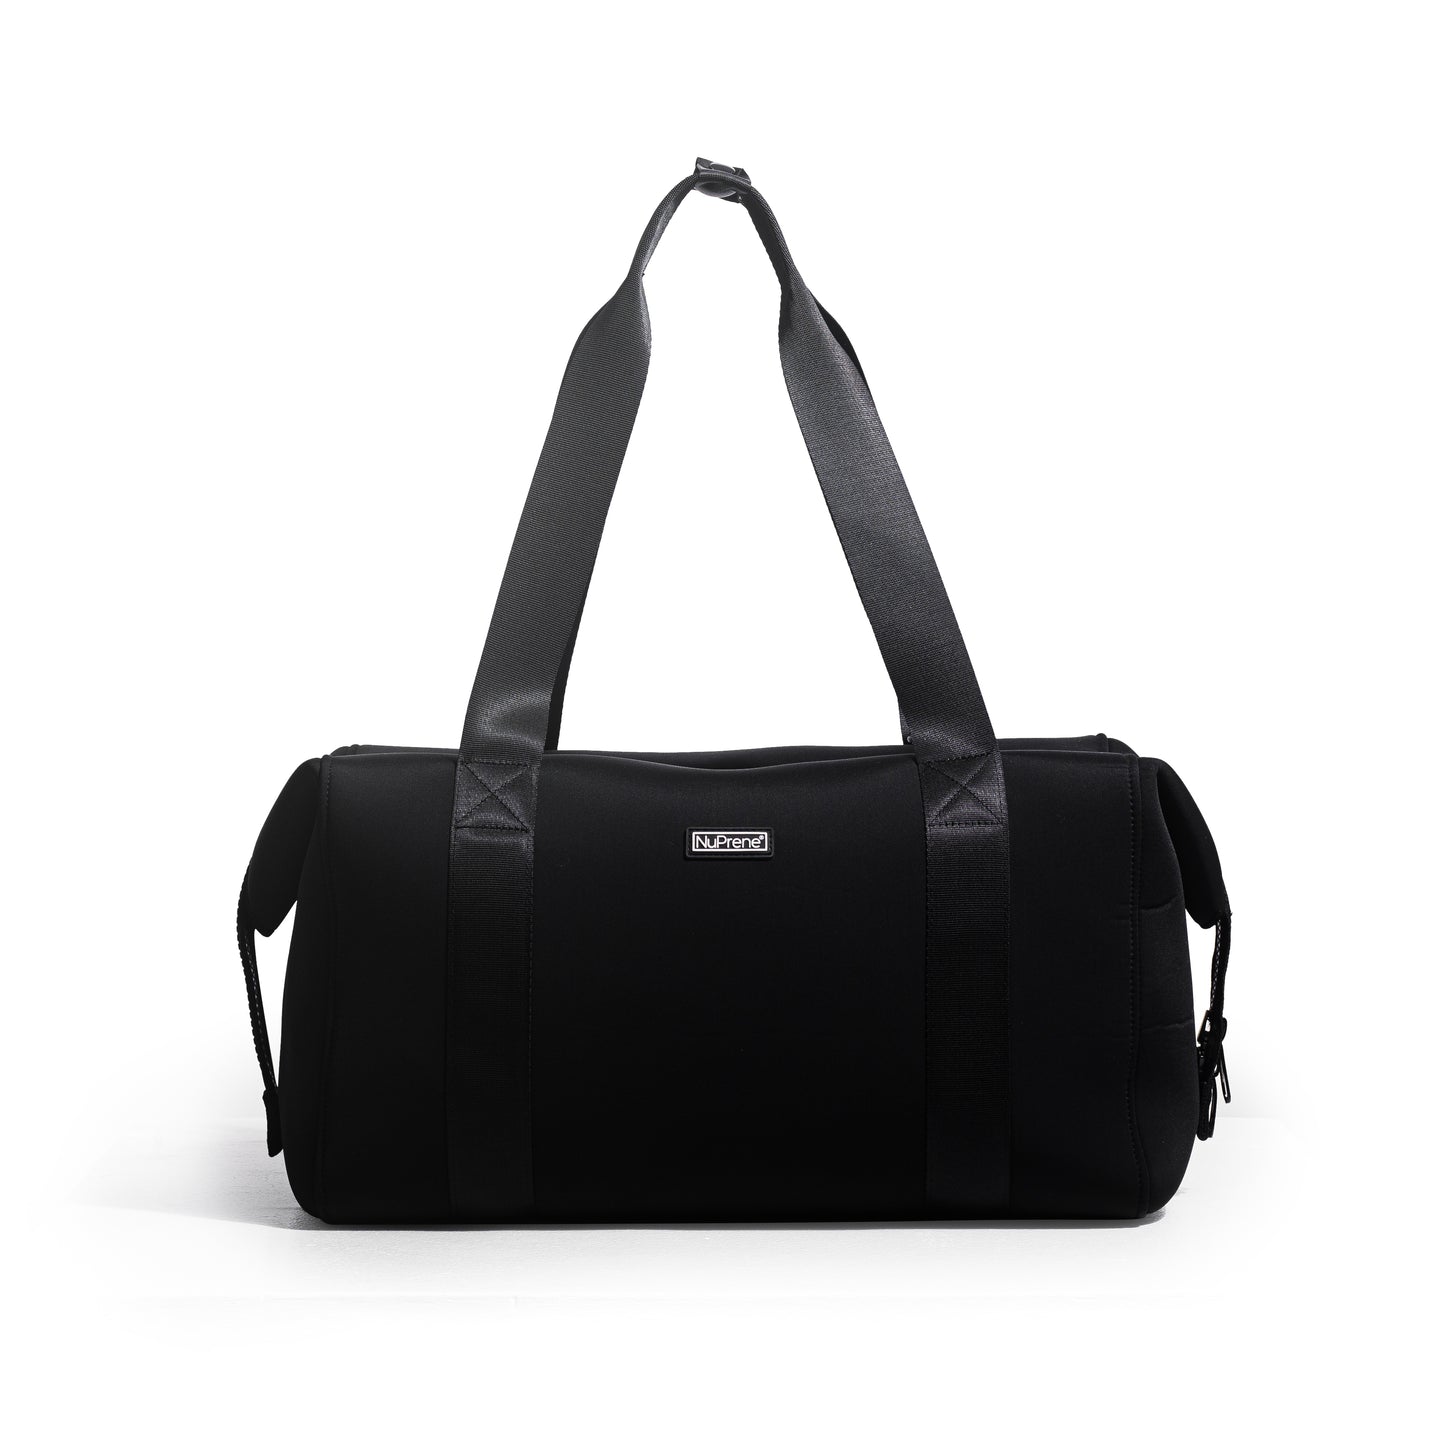 Neo Travel Bag